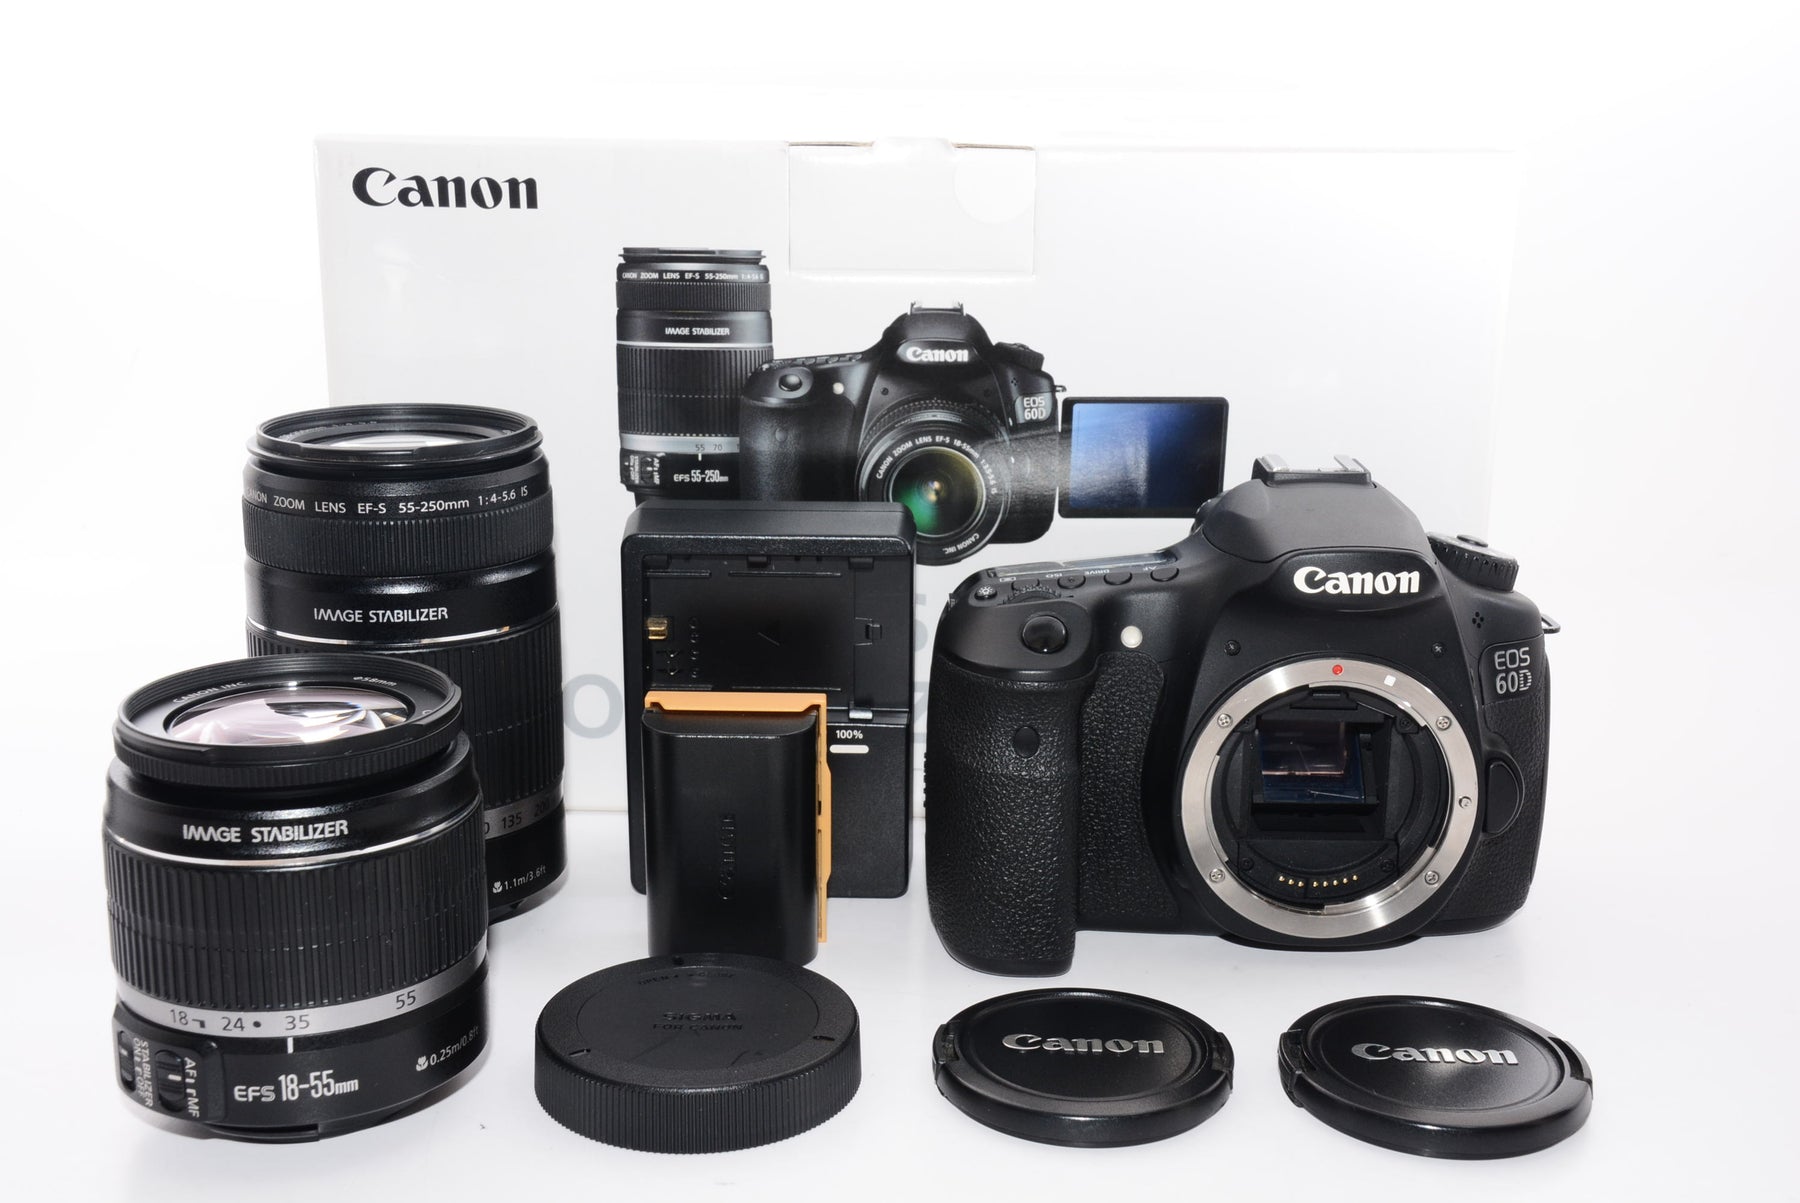 Canon デジタル一眼レフカメラ EOS 60D ボディ EOS60D - 3